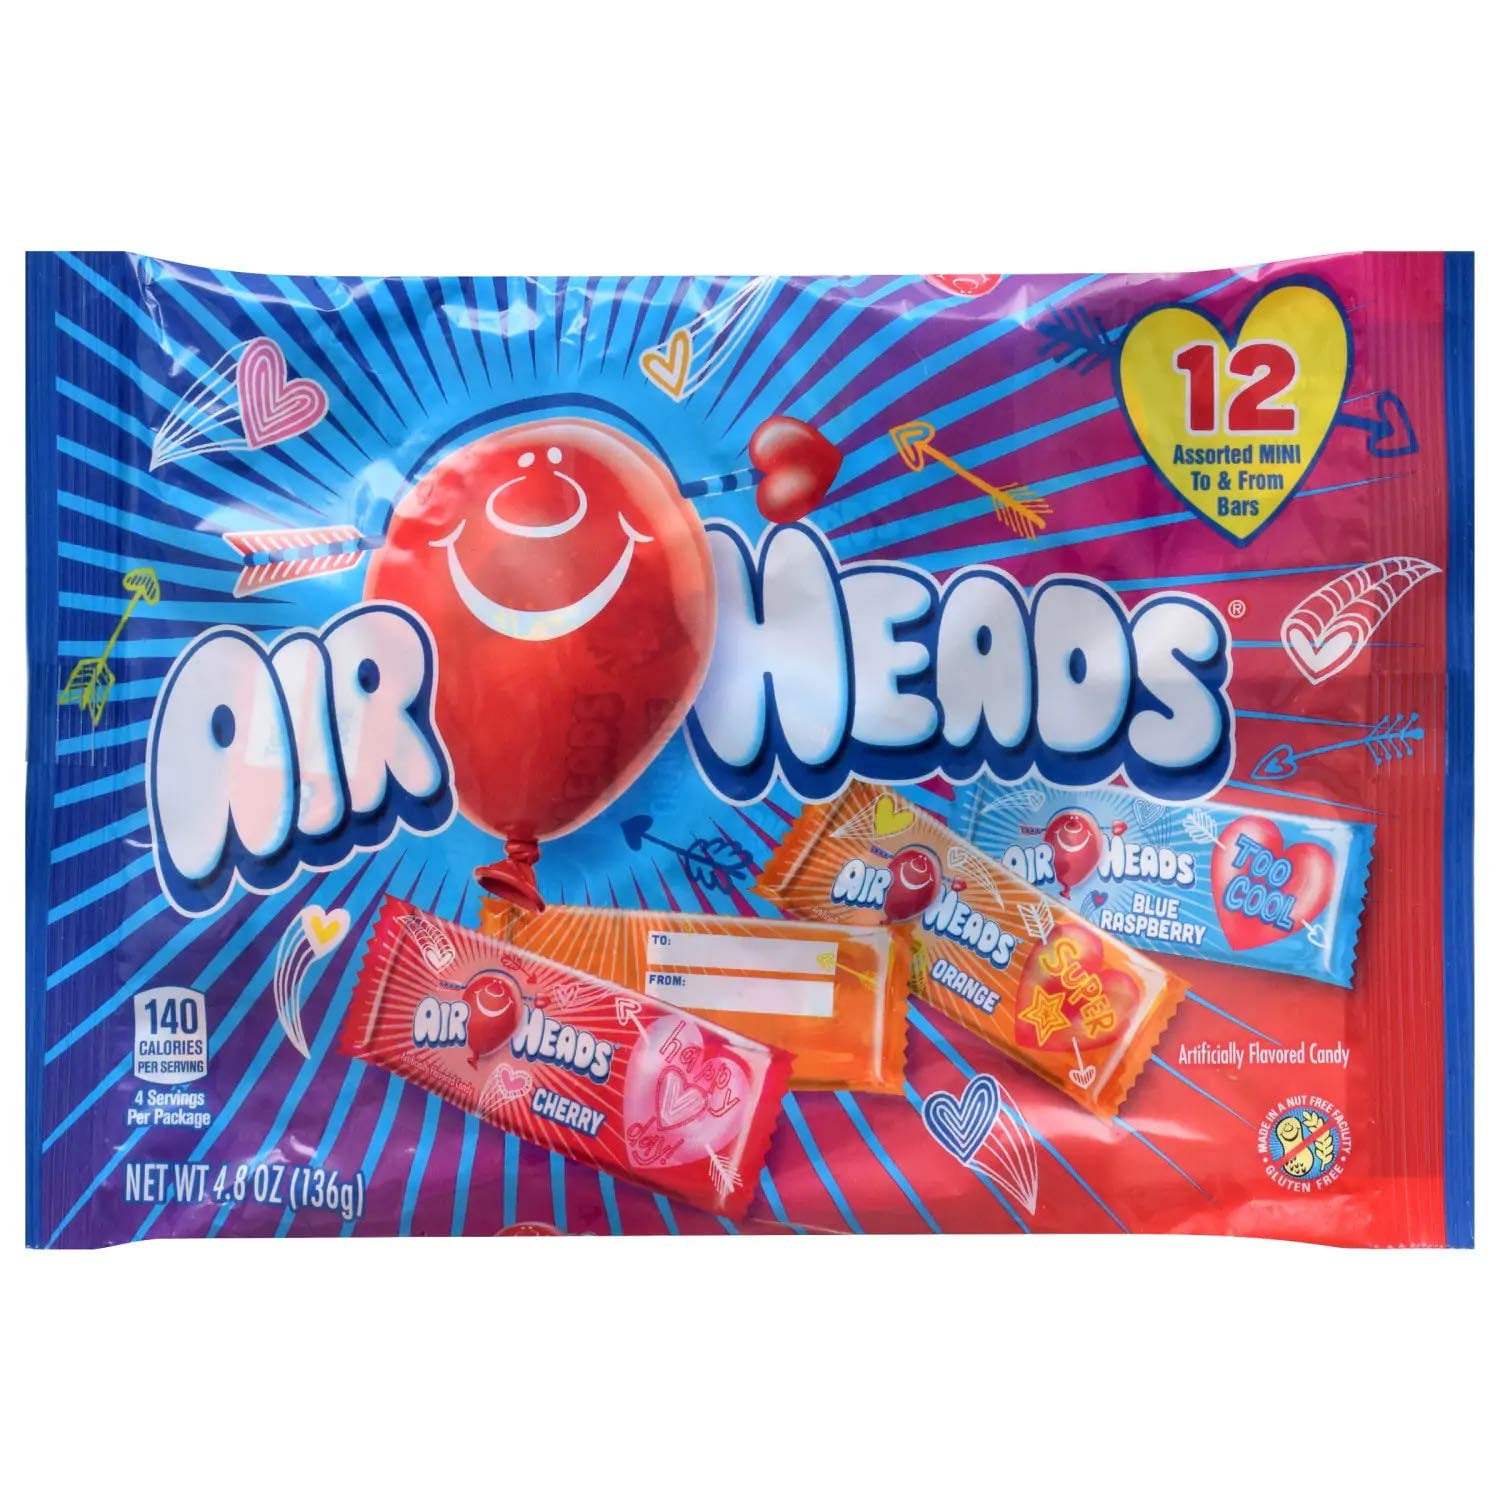 Download Airheads (1) 12pc Bag Assorted Mini Candy Bars - Cherry, Orange & Blue Raspberry Flavors ...